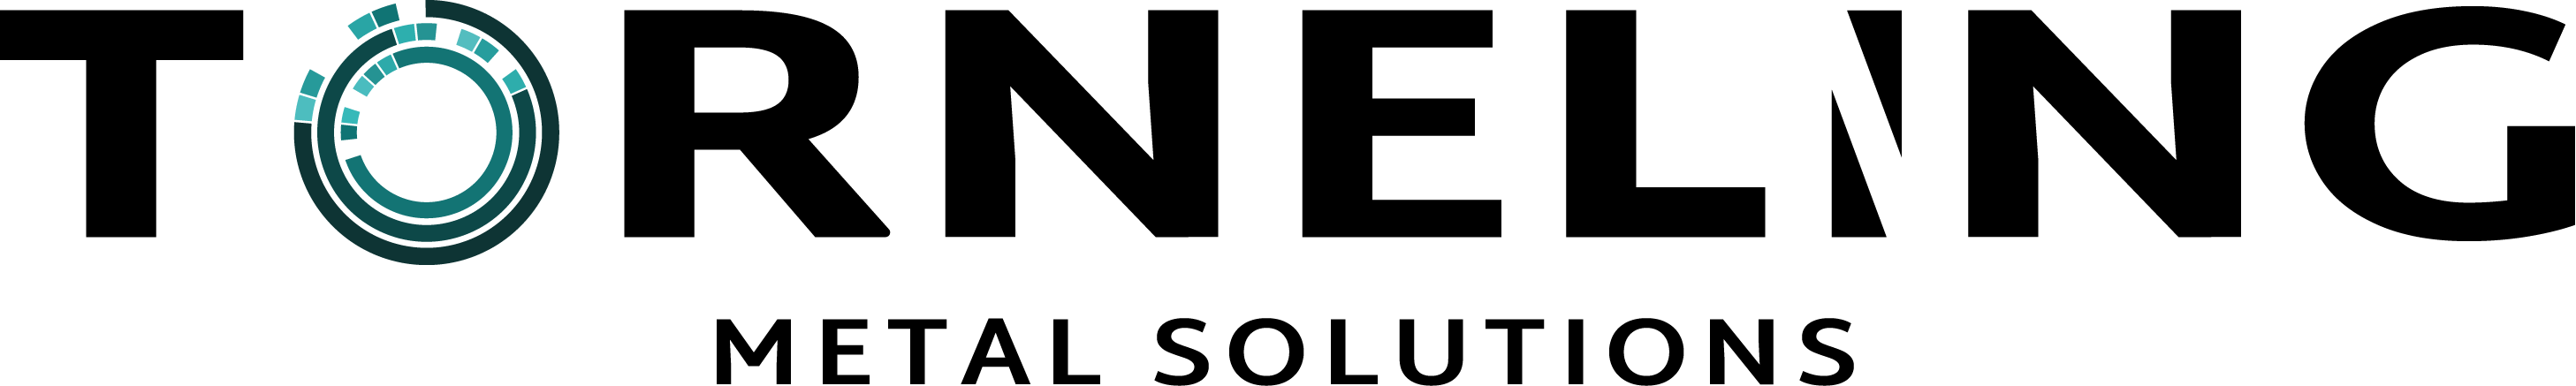 Torneling Logo